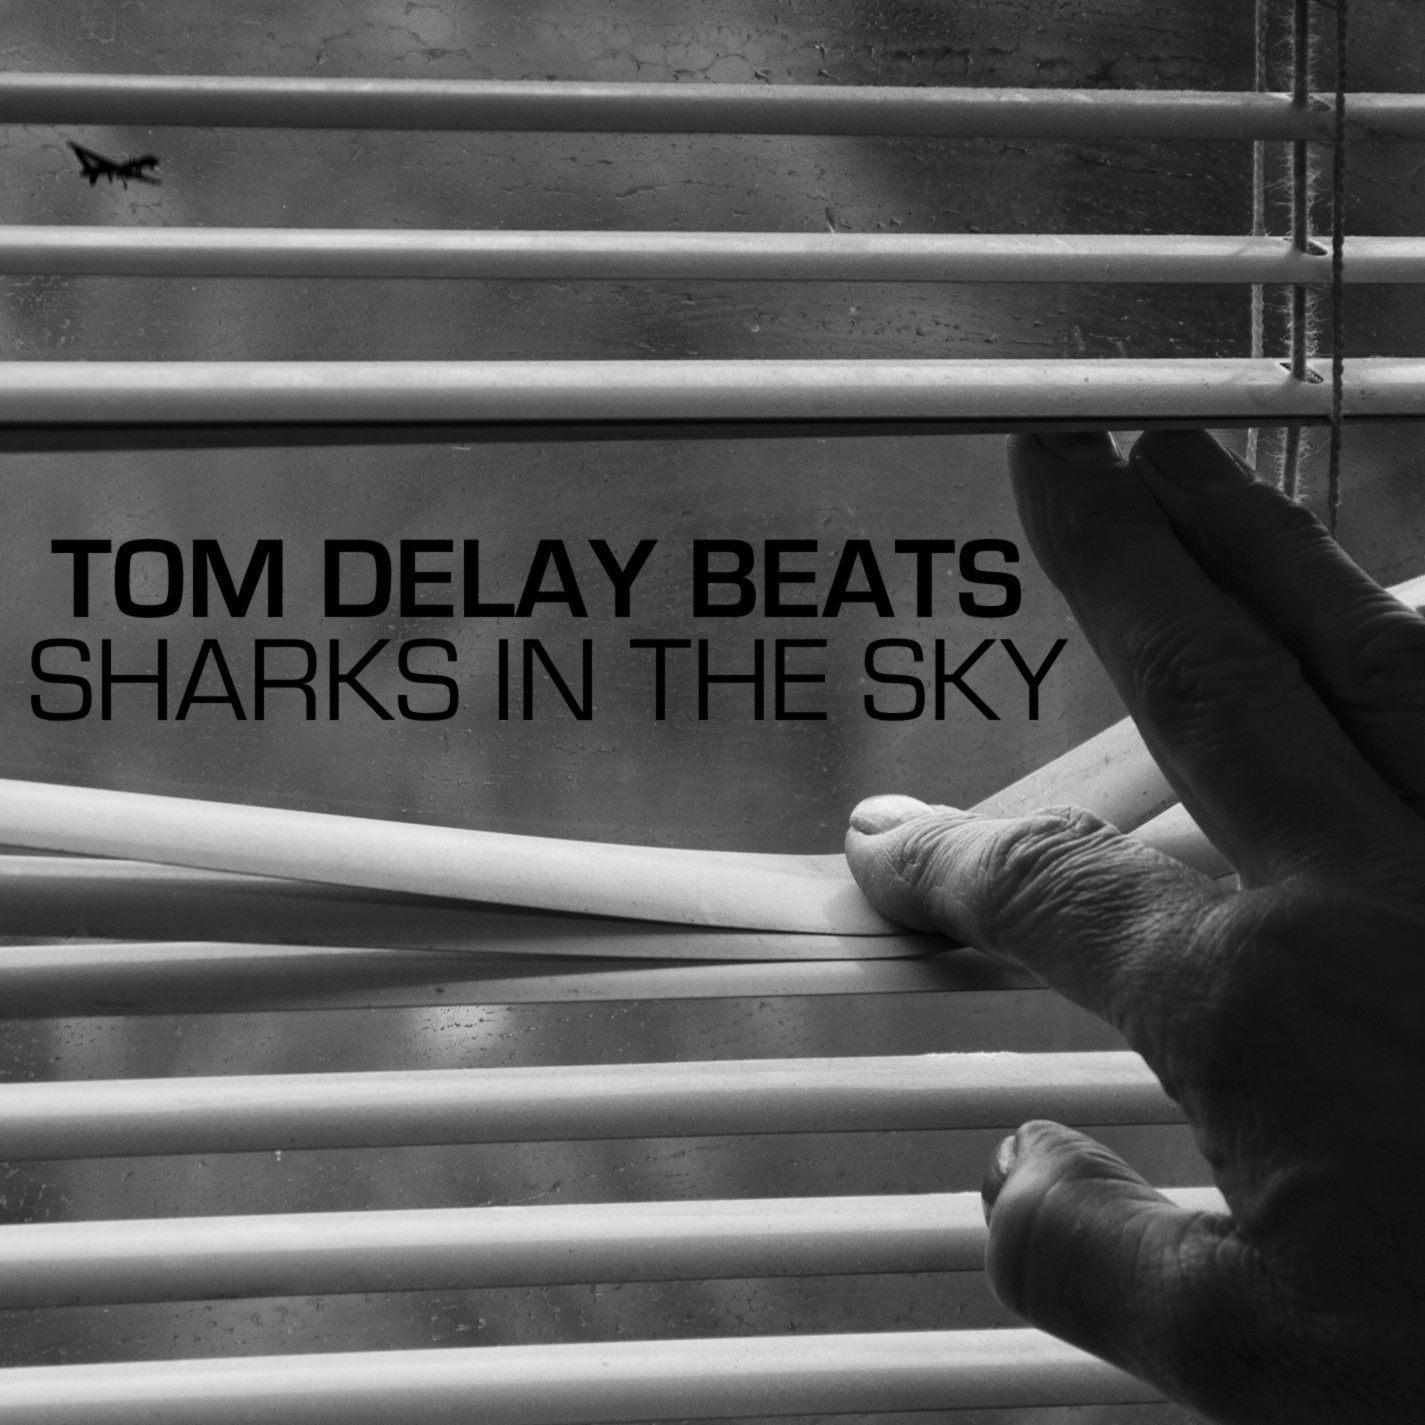 Tom Delay Beats "Dreamlab" Video | @TomDelayBeats